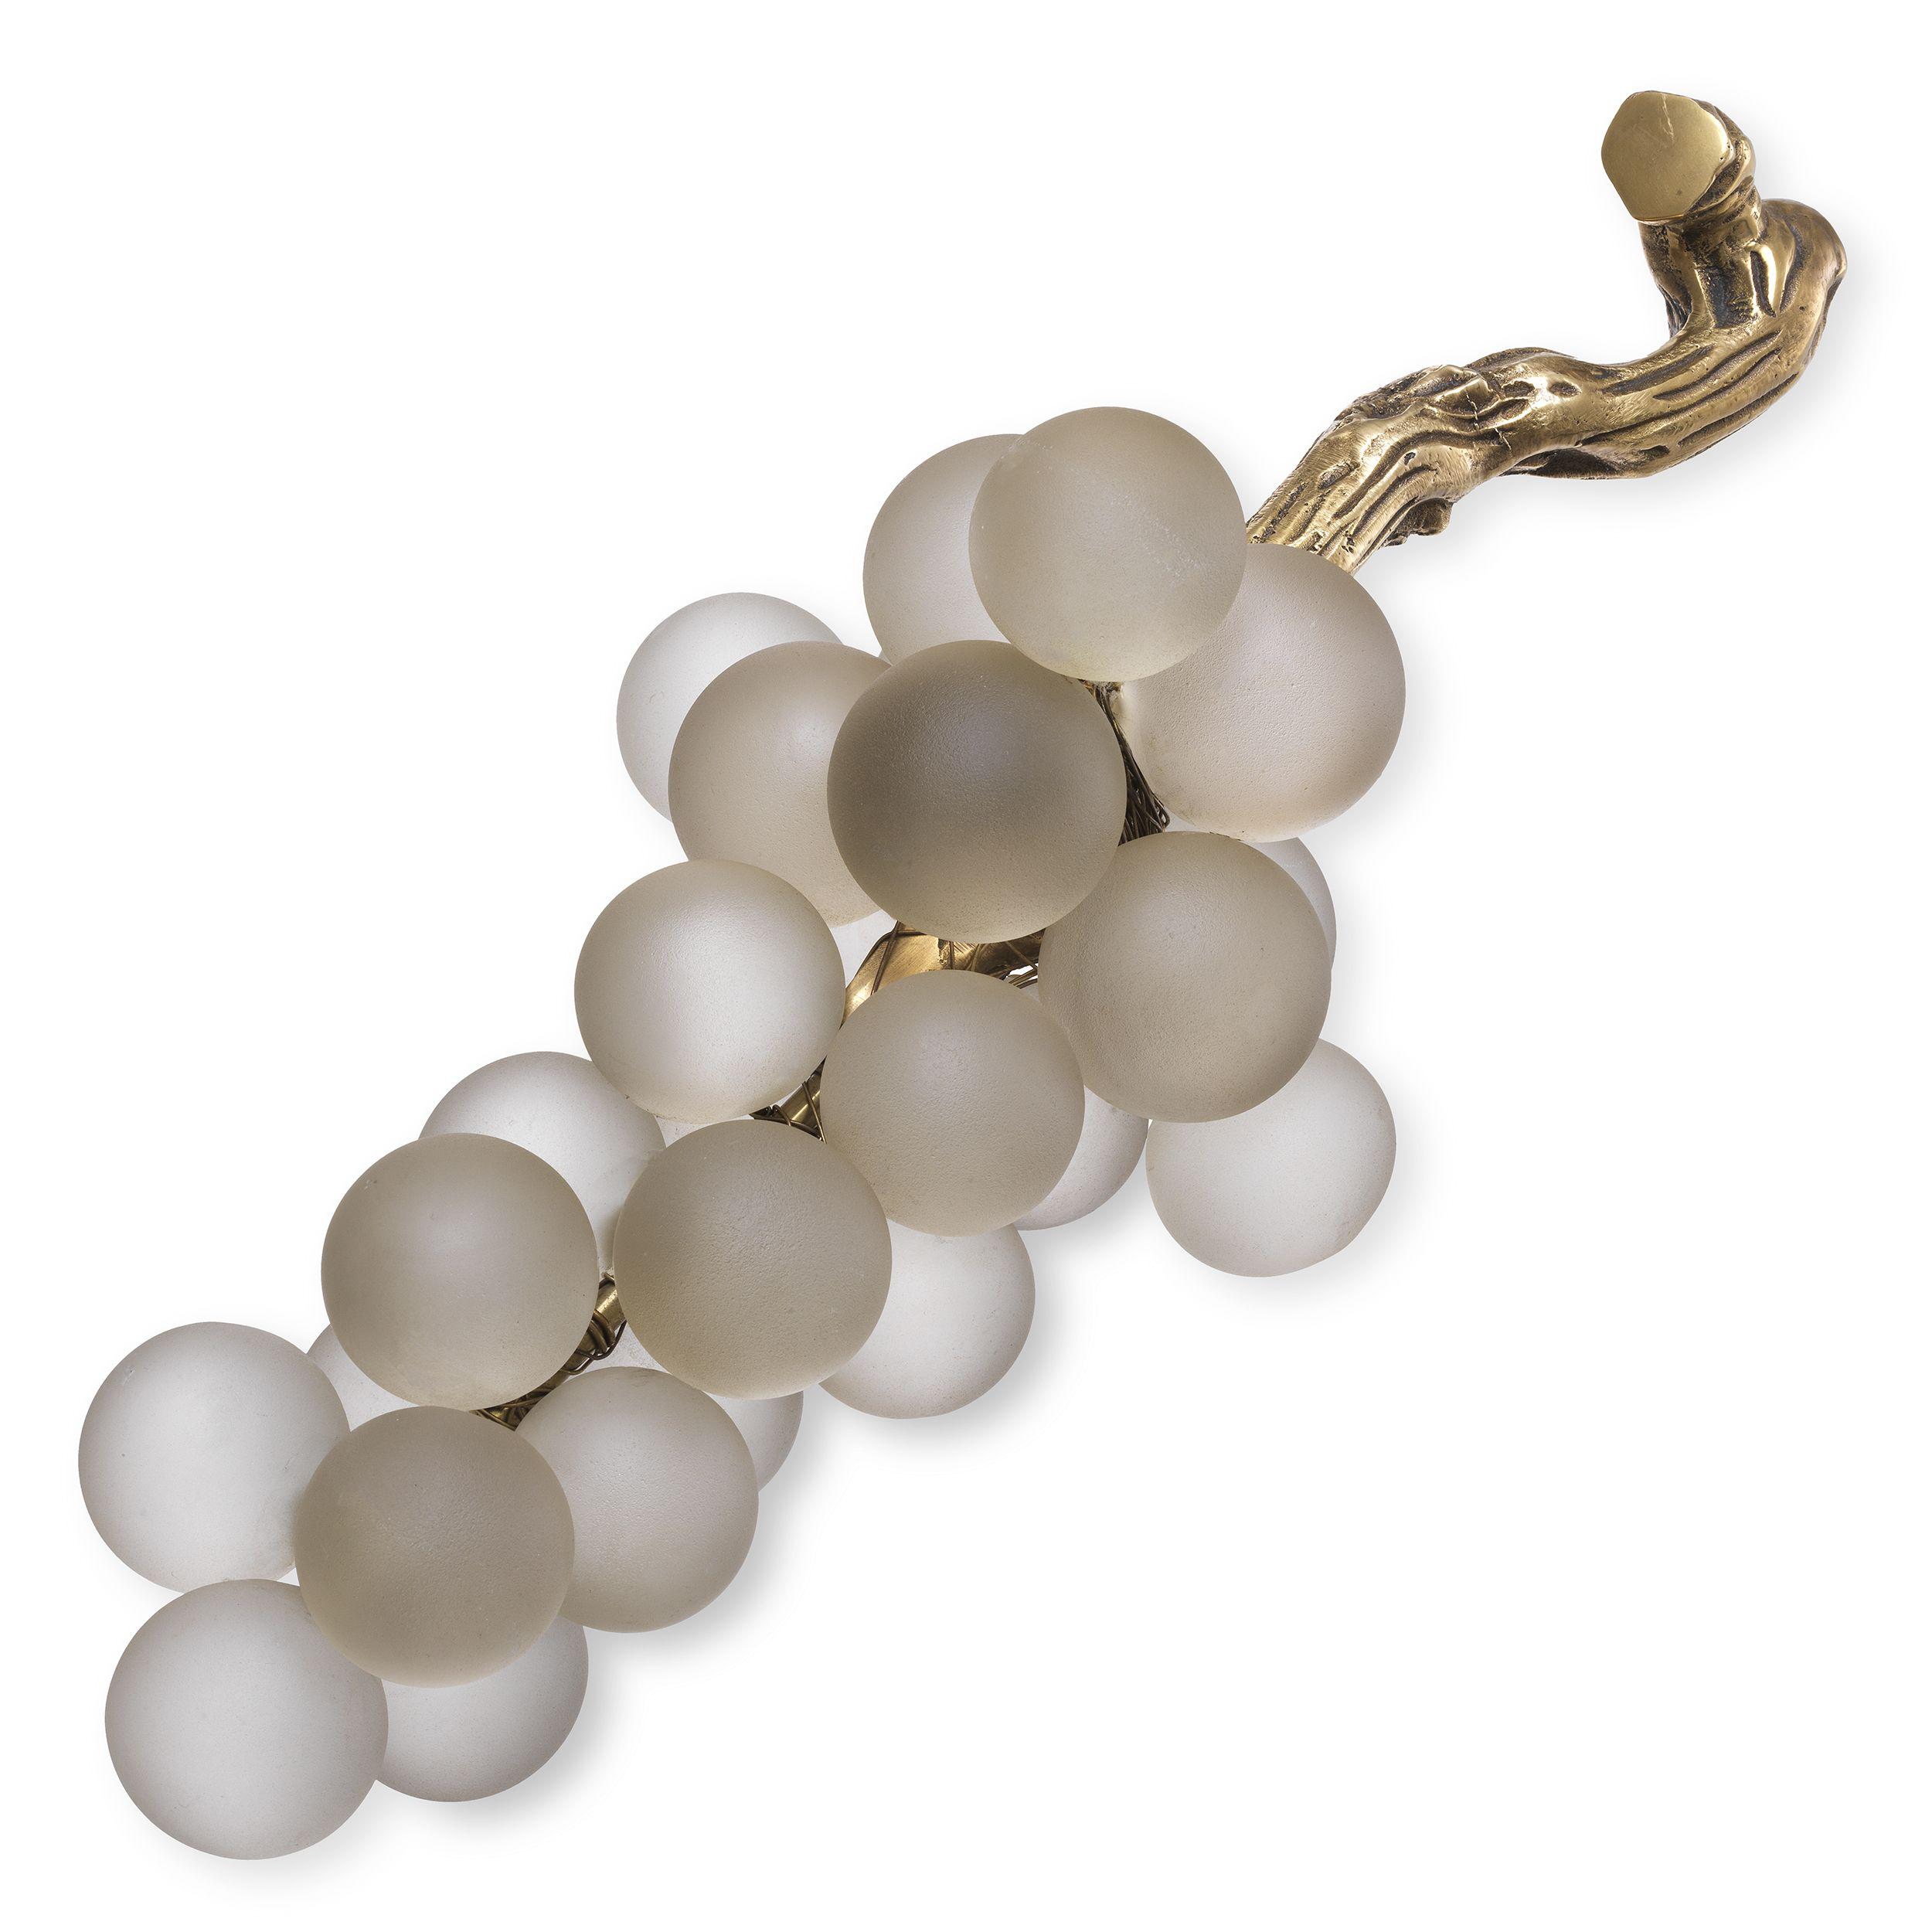 Купить Статуэтка Object French Grapes в интернет-магазине roooms.ru